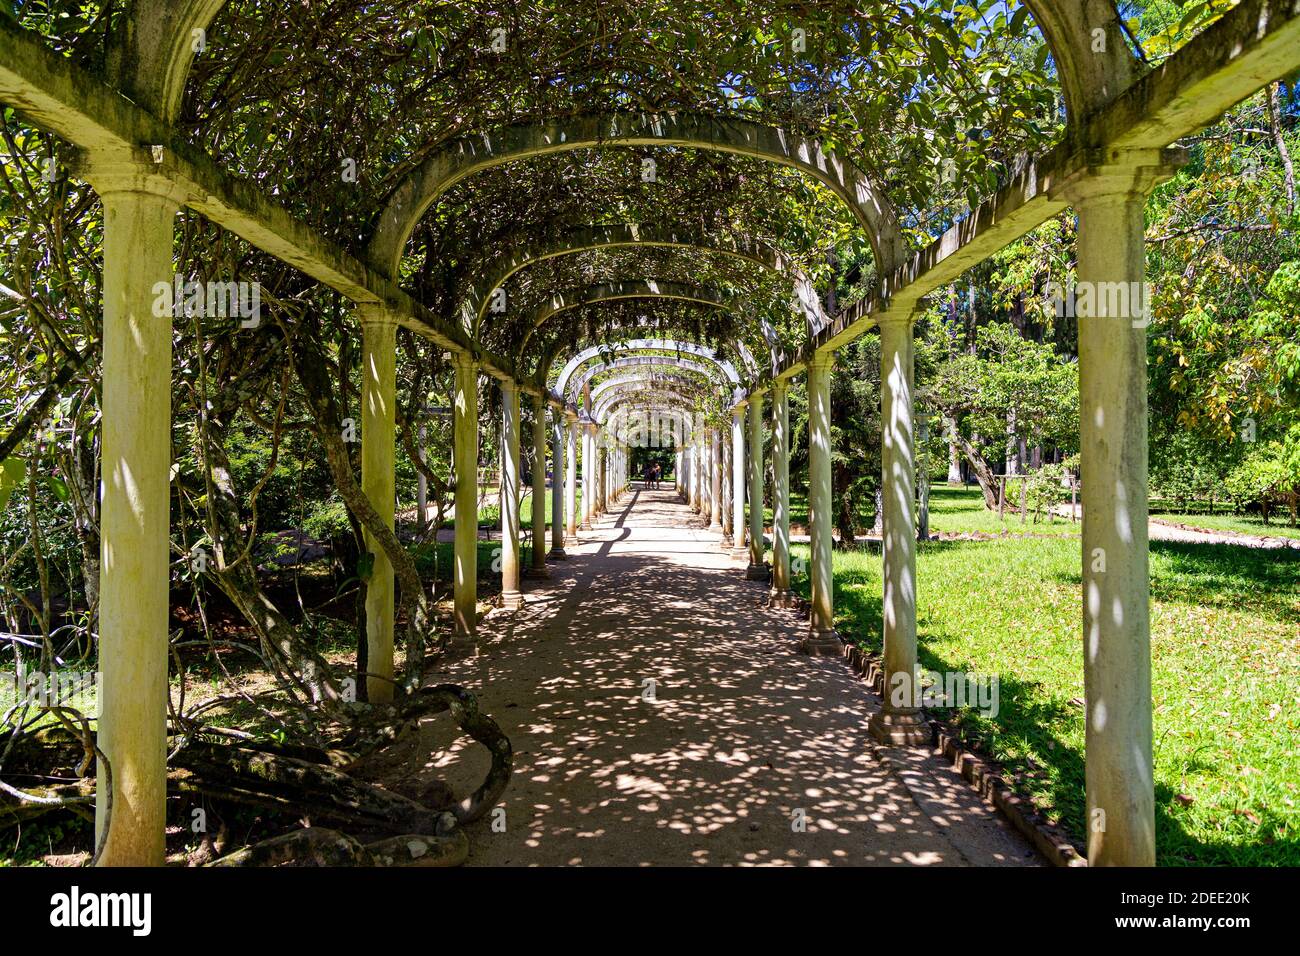 Beautiful arched pergola. Tunnel of vegetation in the park. Rio de Janeiro Botanical Garden, Brazil. Stock Photo